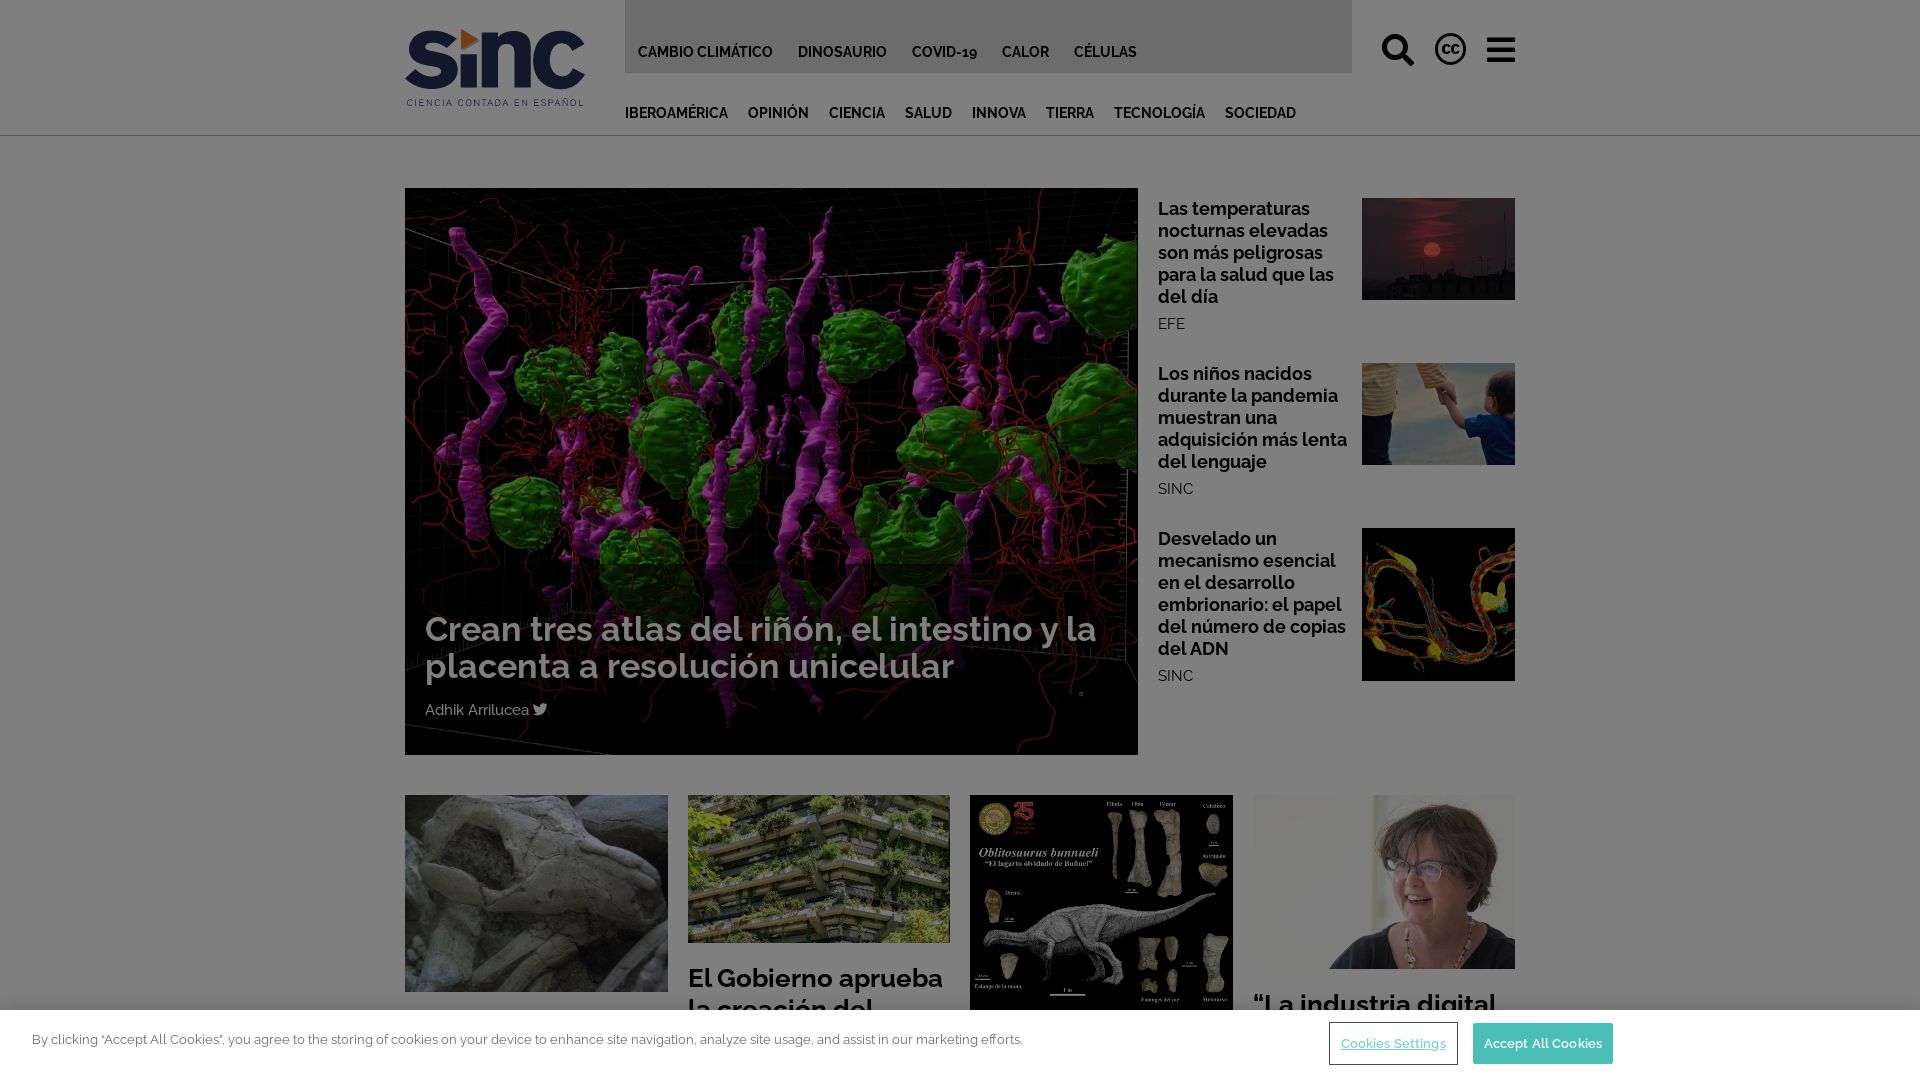 Website status agenciasinc.es is   ONLINE